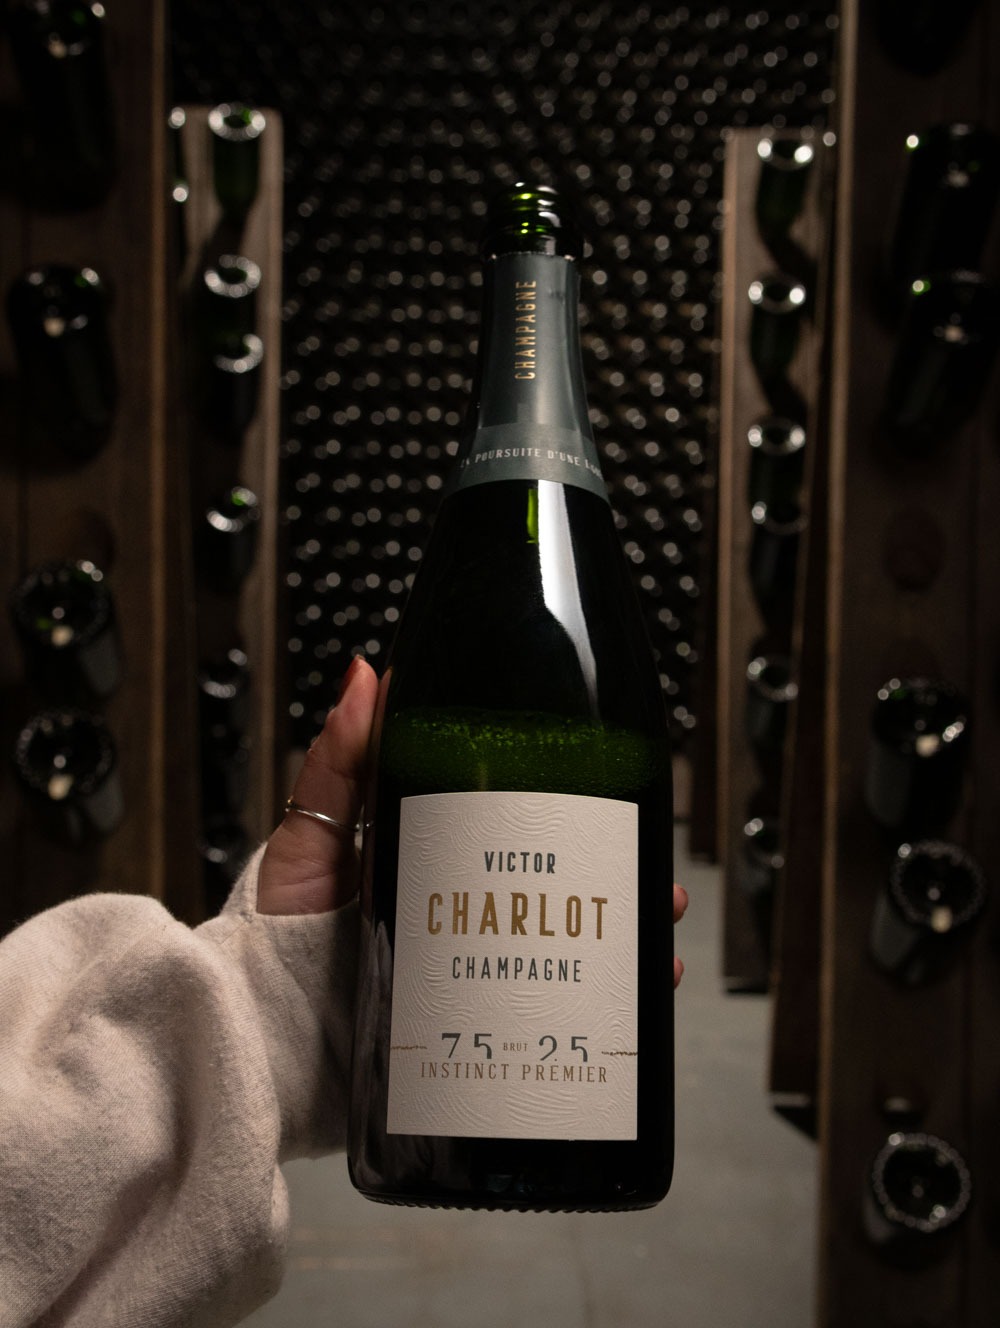 Champagne Victor Charlot Instinct Premier 75/25 Brut NV